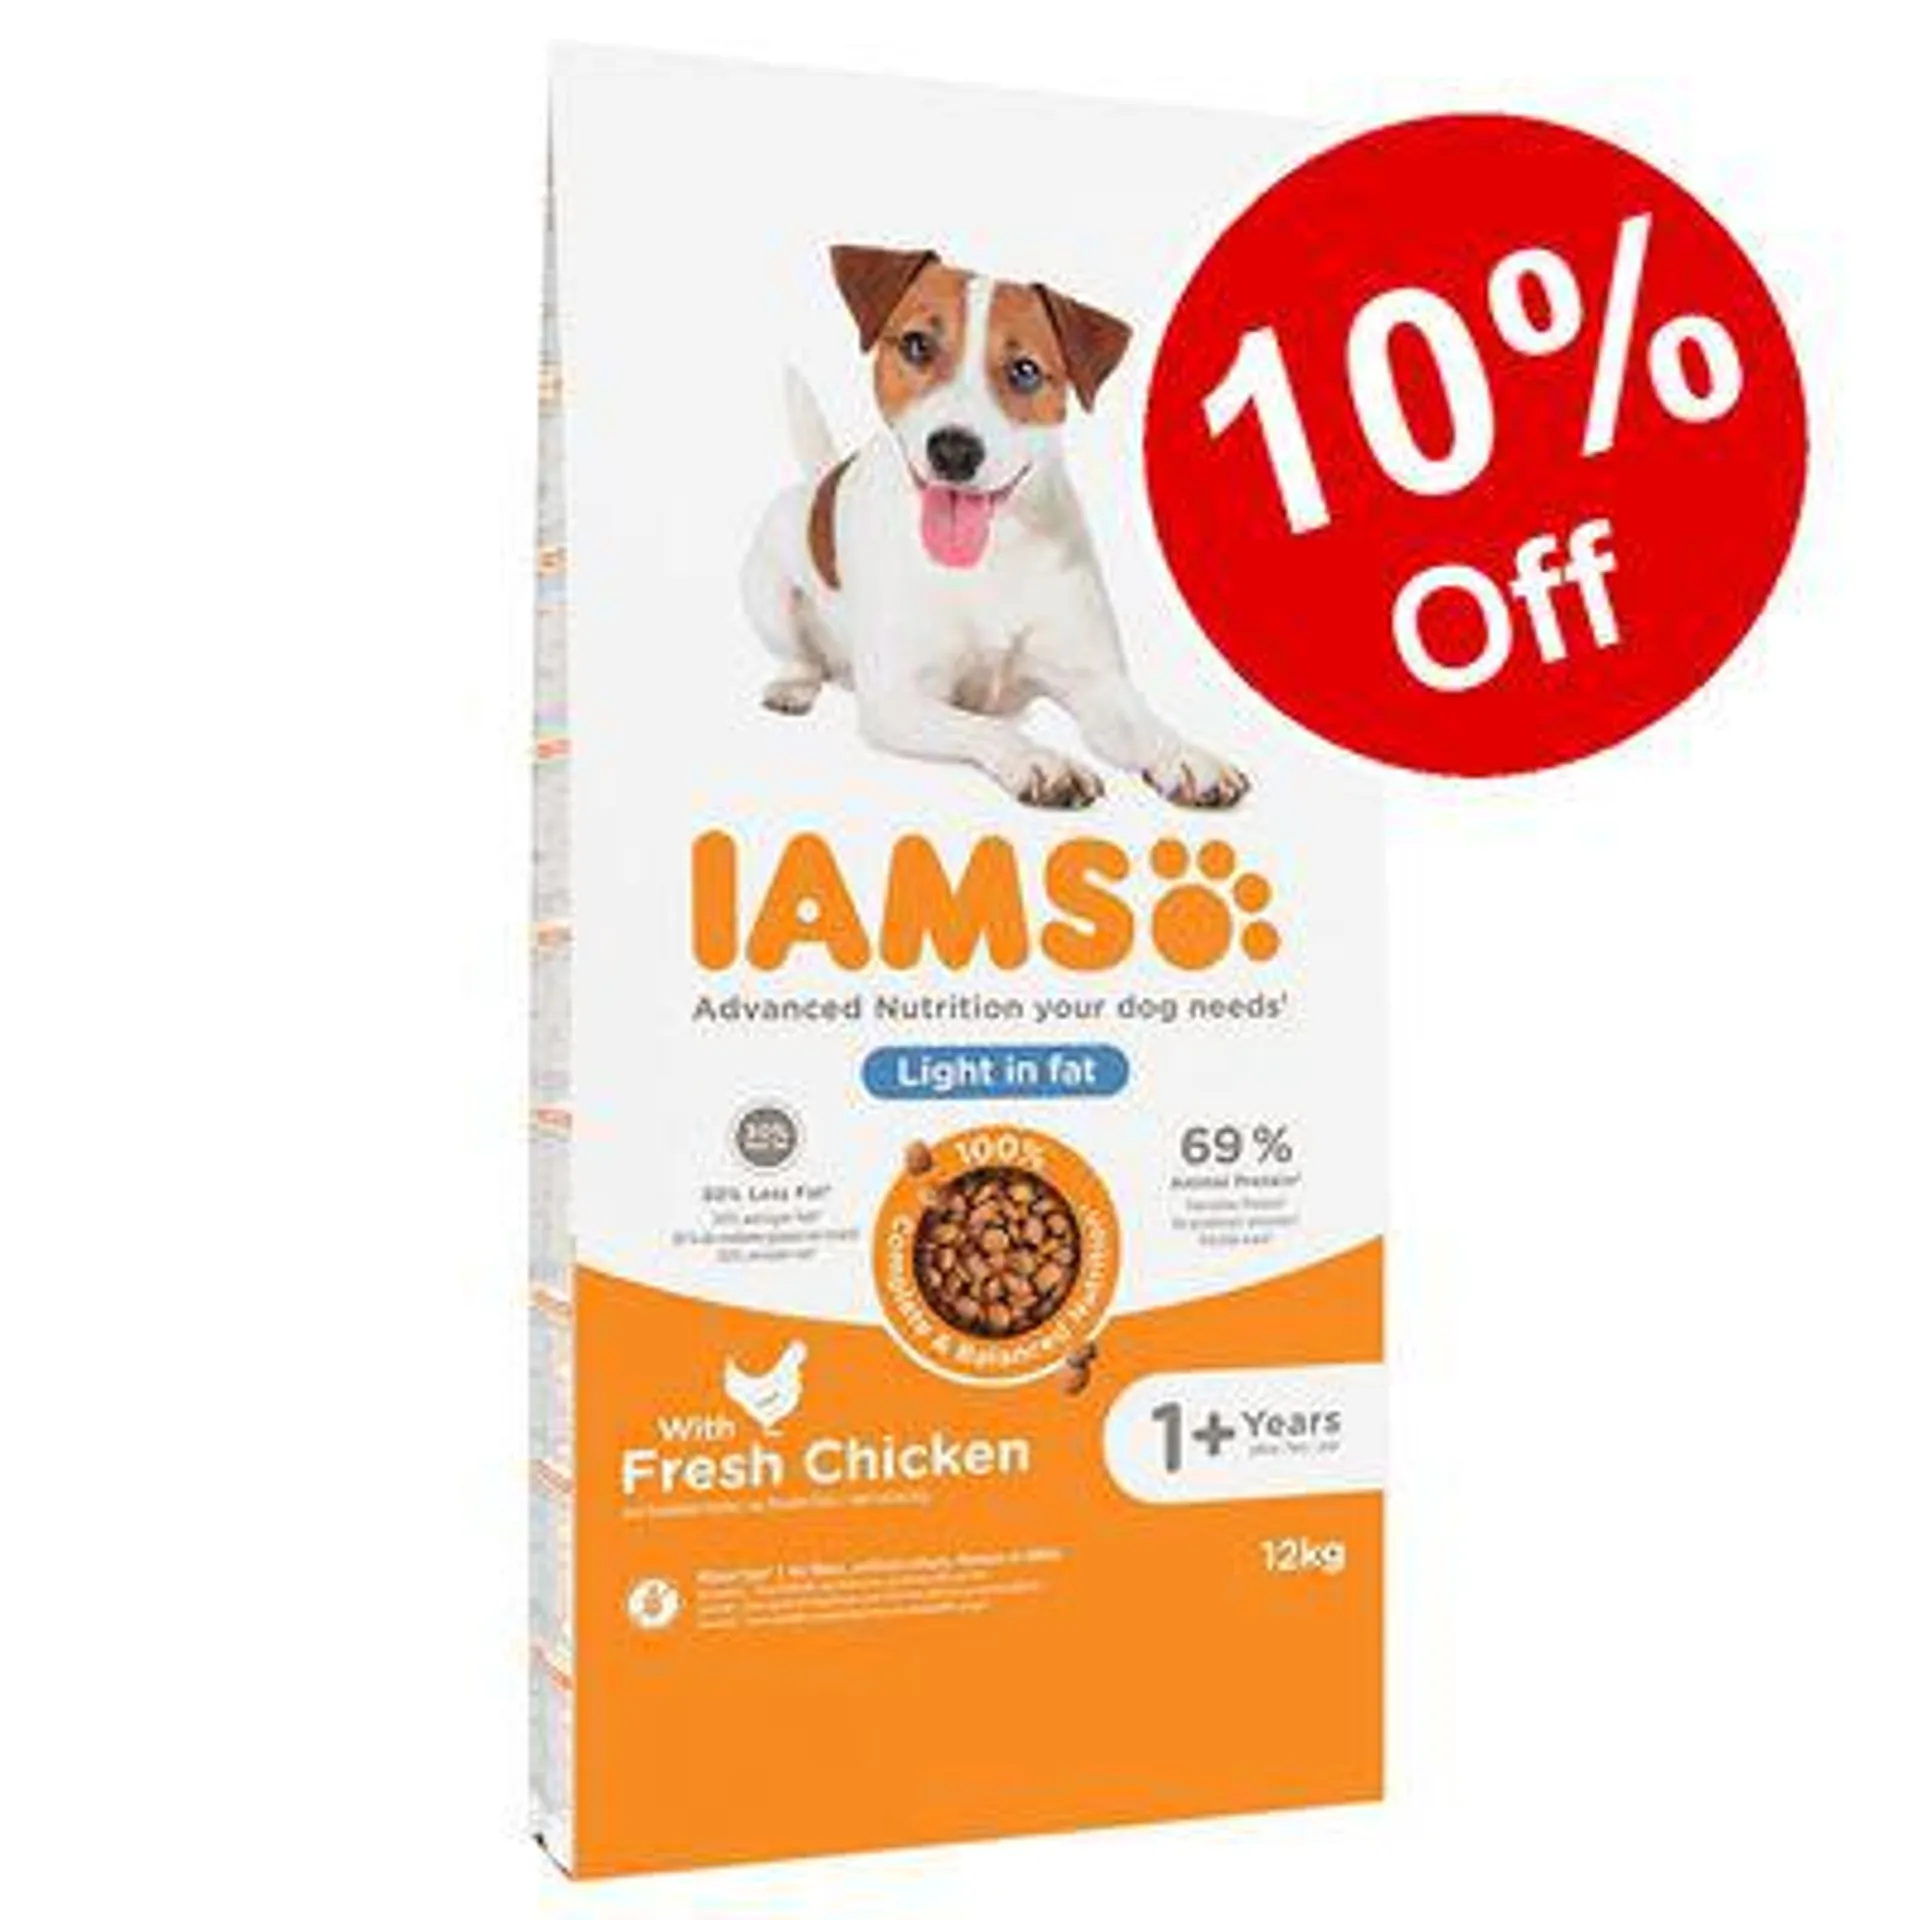 12kg IAMS for Vitality Senior/Adult Dry Dog Food - 10% Off! *